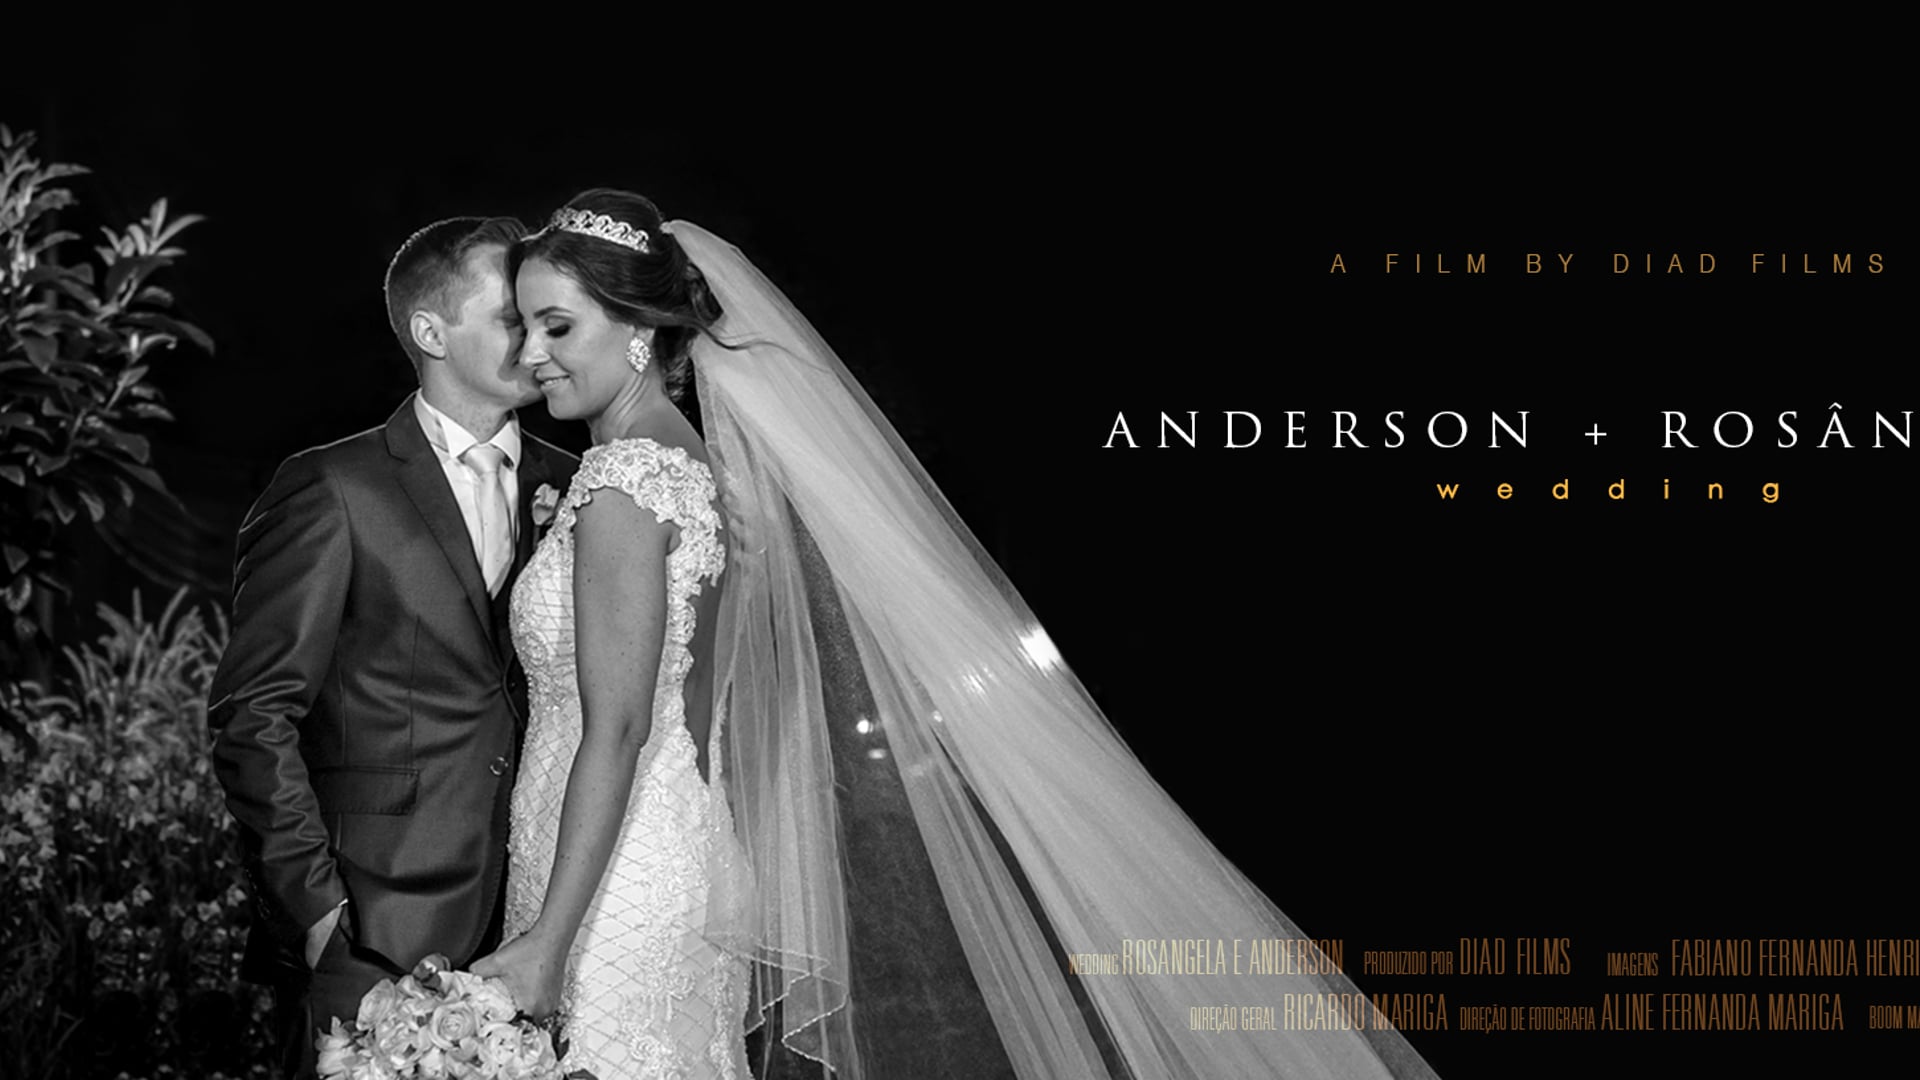 The One -  Rosangela e Anderson - diad films